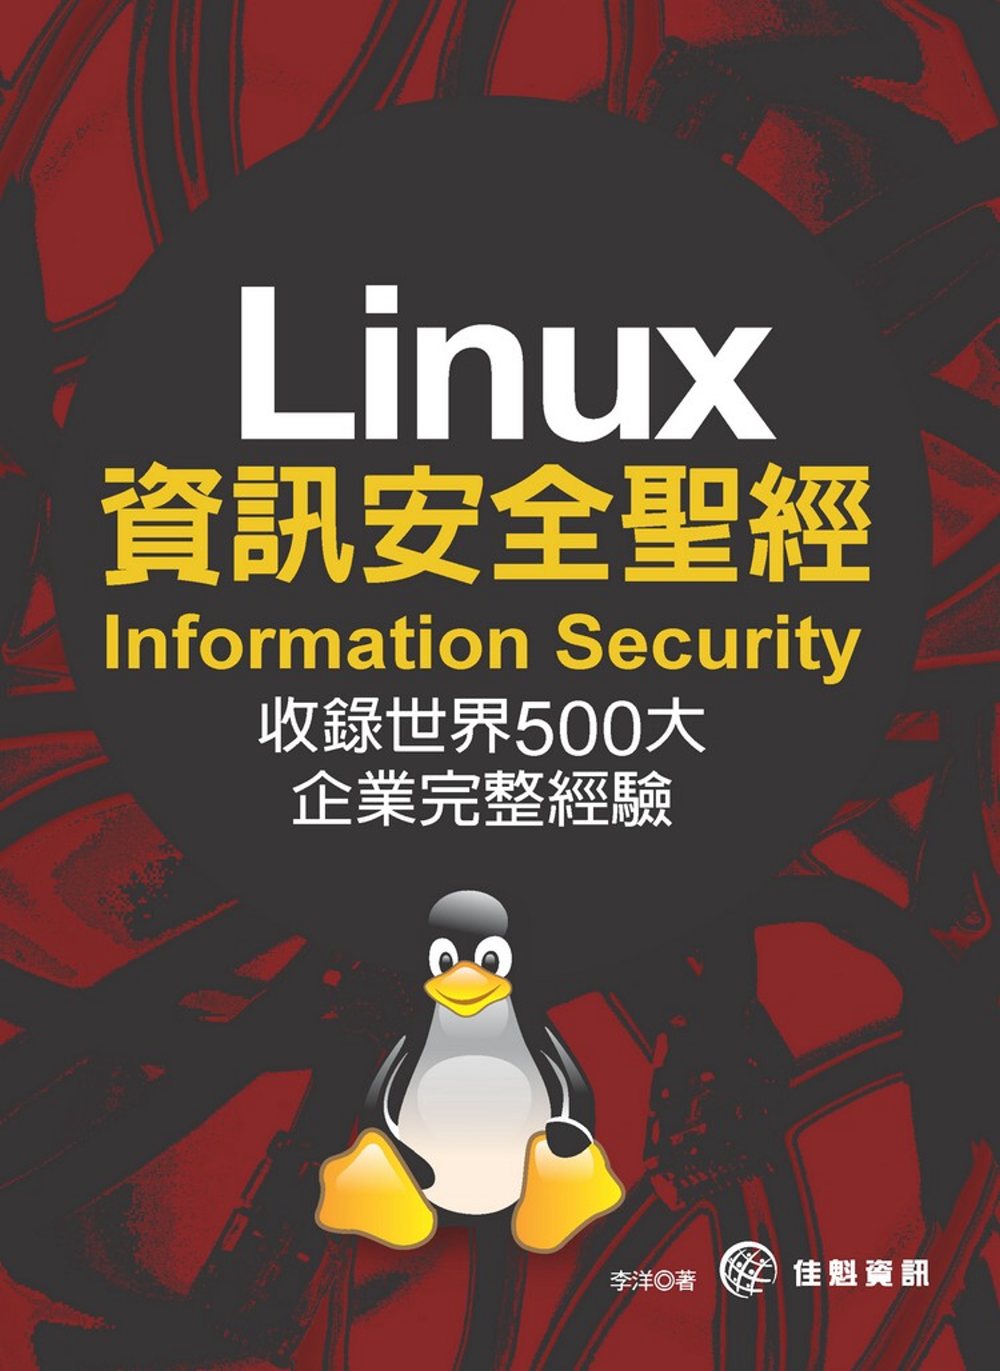 Linux資訊安全聖經(Information Security)：收錄世界500大企業完整經驗